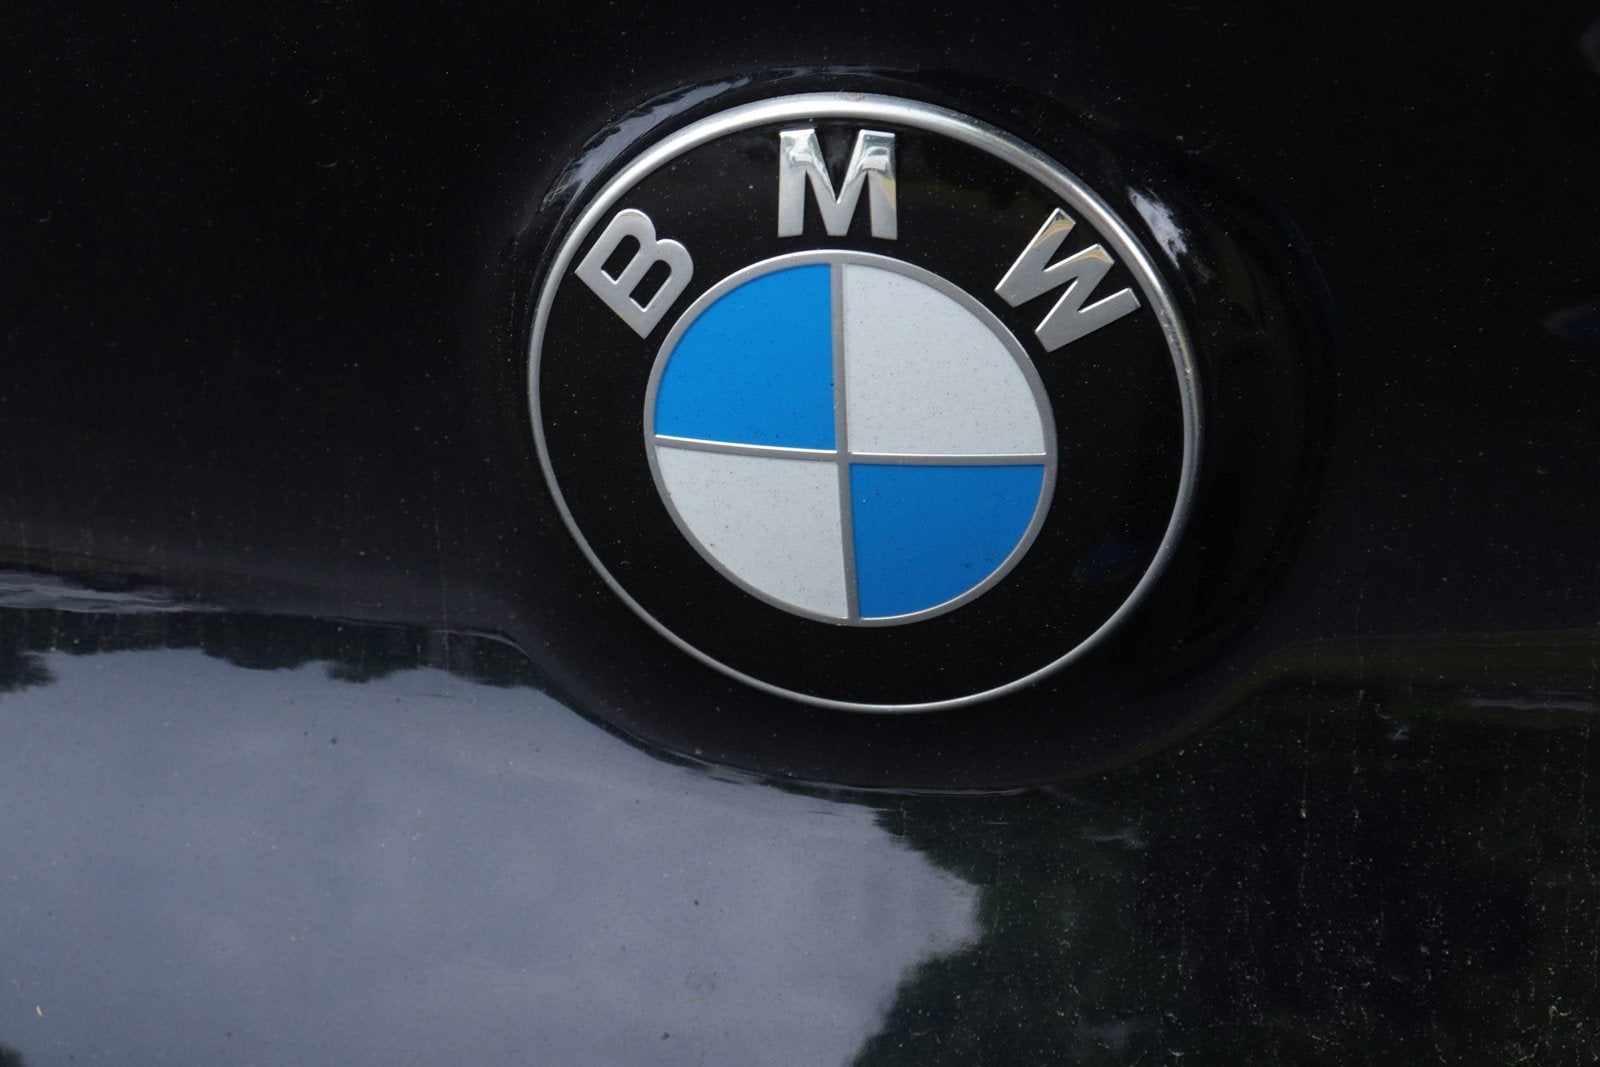 2022 BMW 8 Series 840i